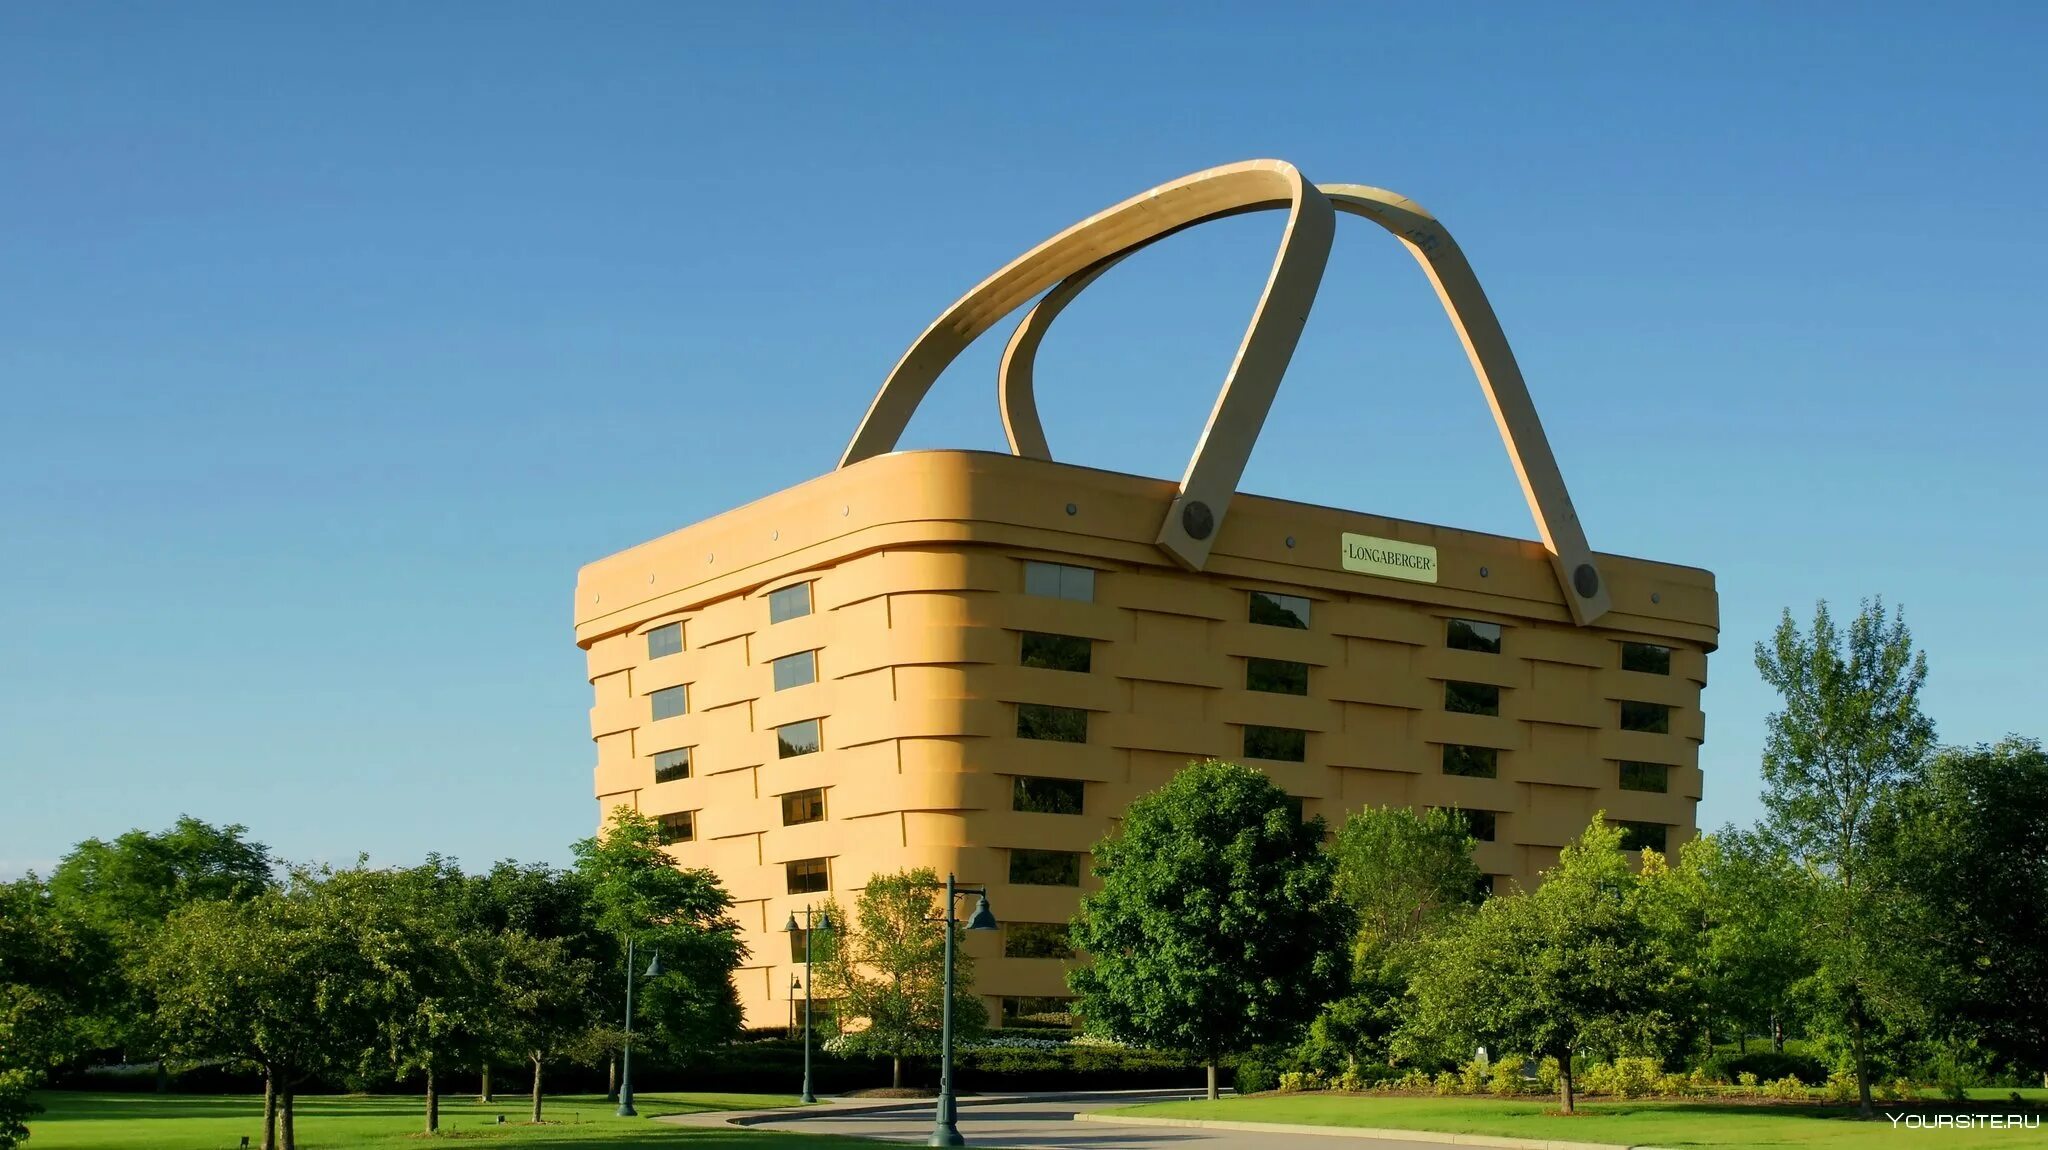 Здание-корзина (the Basket building), Огайо, США. Штаб квартира Longaberger — Ньюарк, штат Огайо, США. The Basket building Огайо США. Здание корзина штат Огайо США.